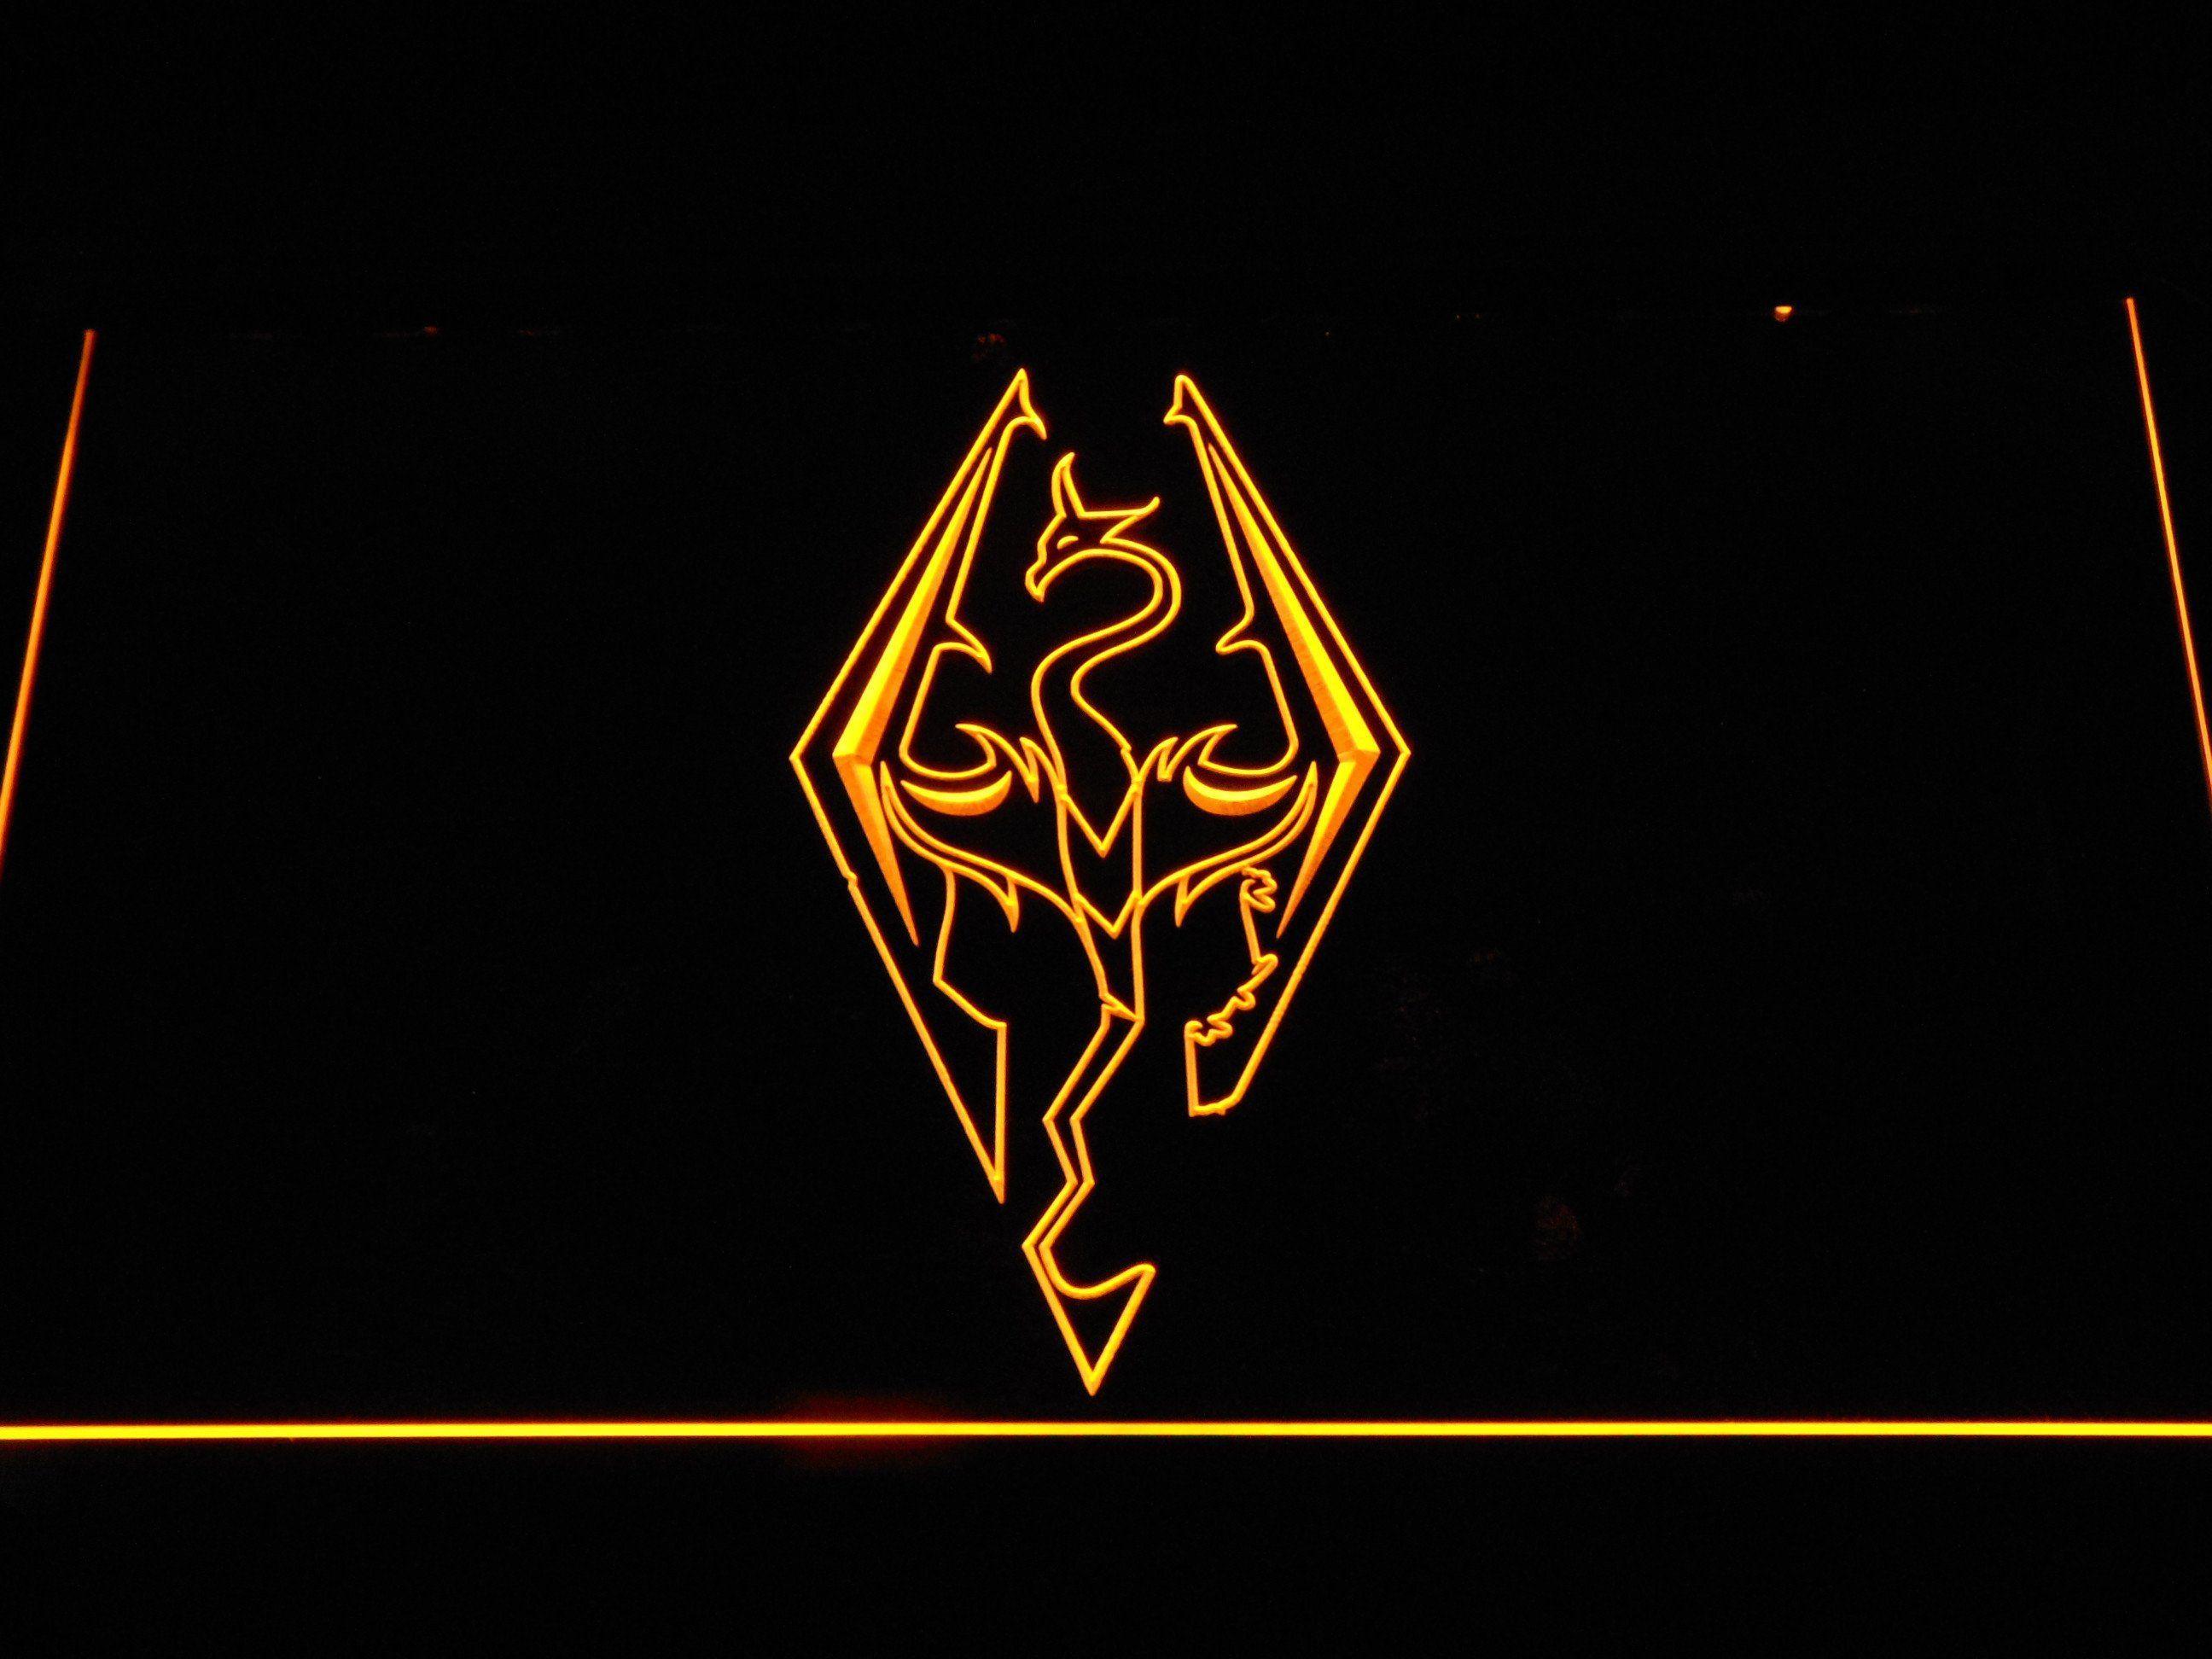 Cool Gold Dragon Logo - Skyrim Dragon Logo LED Neon Sign. Products. Led neon signs, Logos